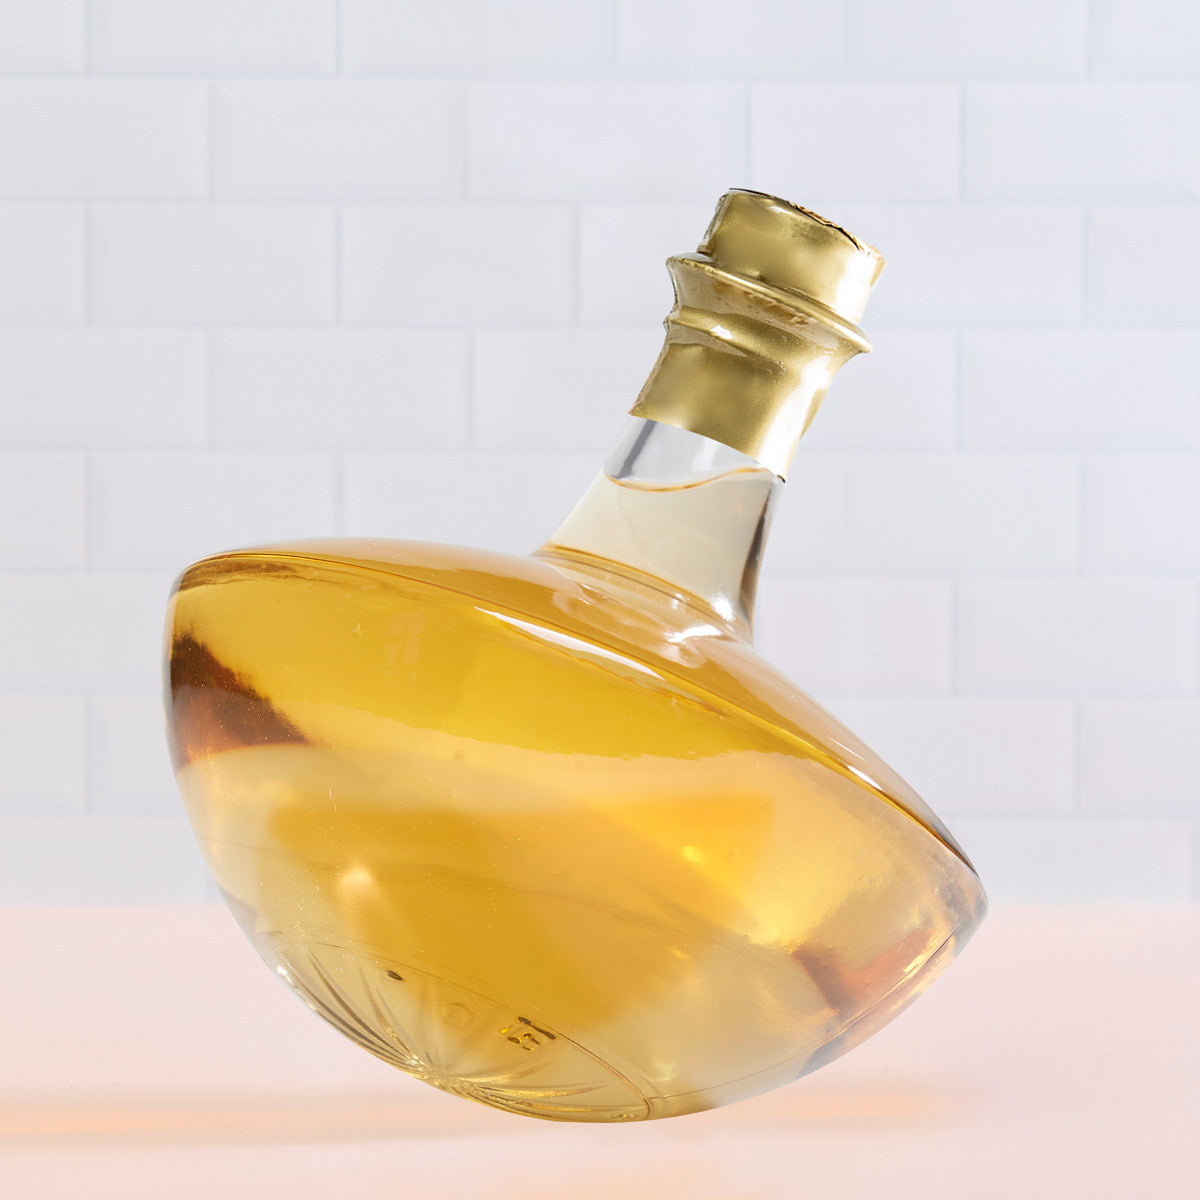 Limited Edition Tipsy Bottle 700ml - Butterscotch Liqueur (Gift Box Not Included) - Flaschengeist (Aust) Pty Ltd